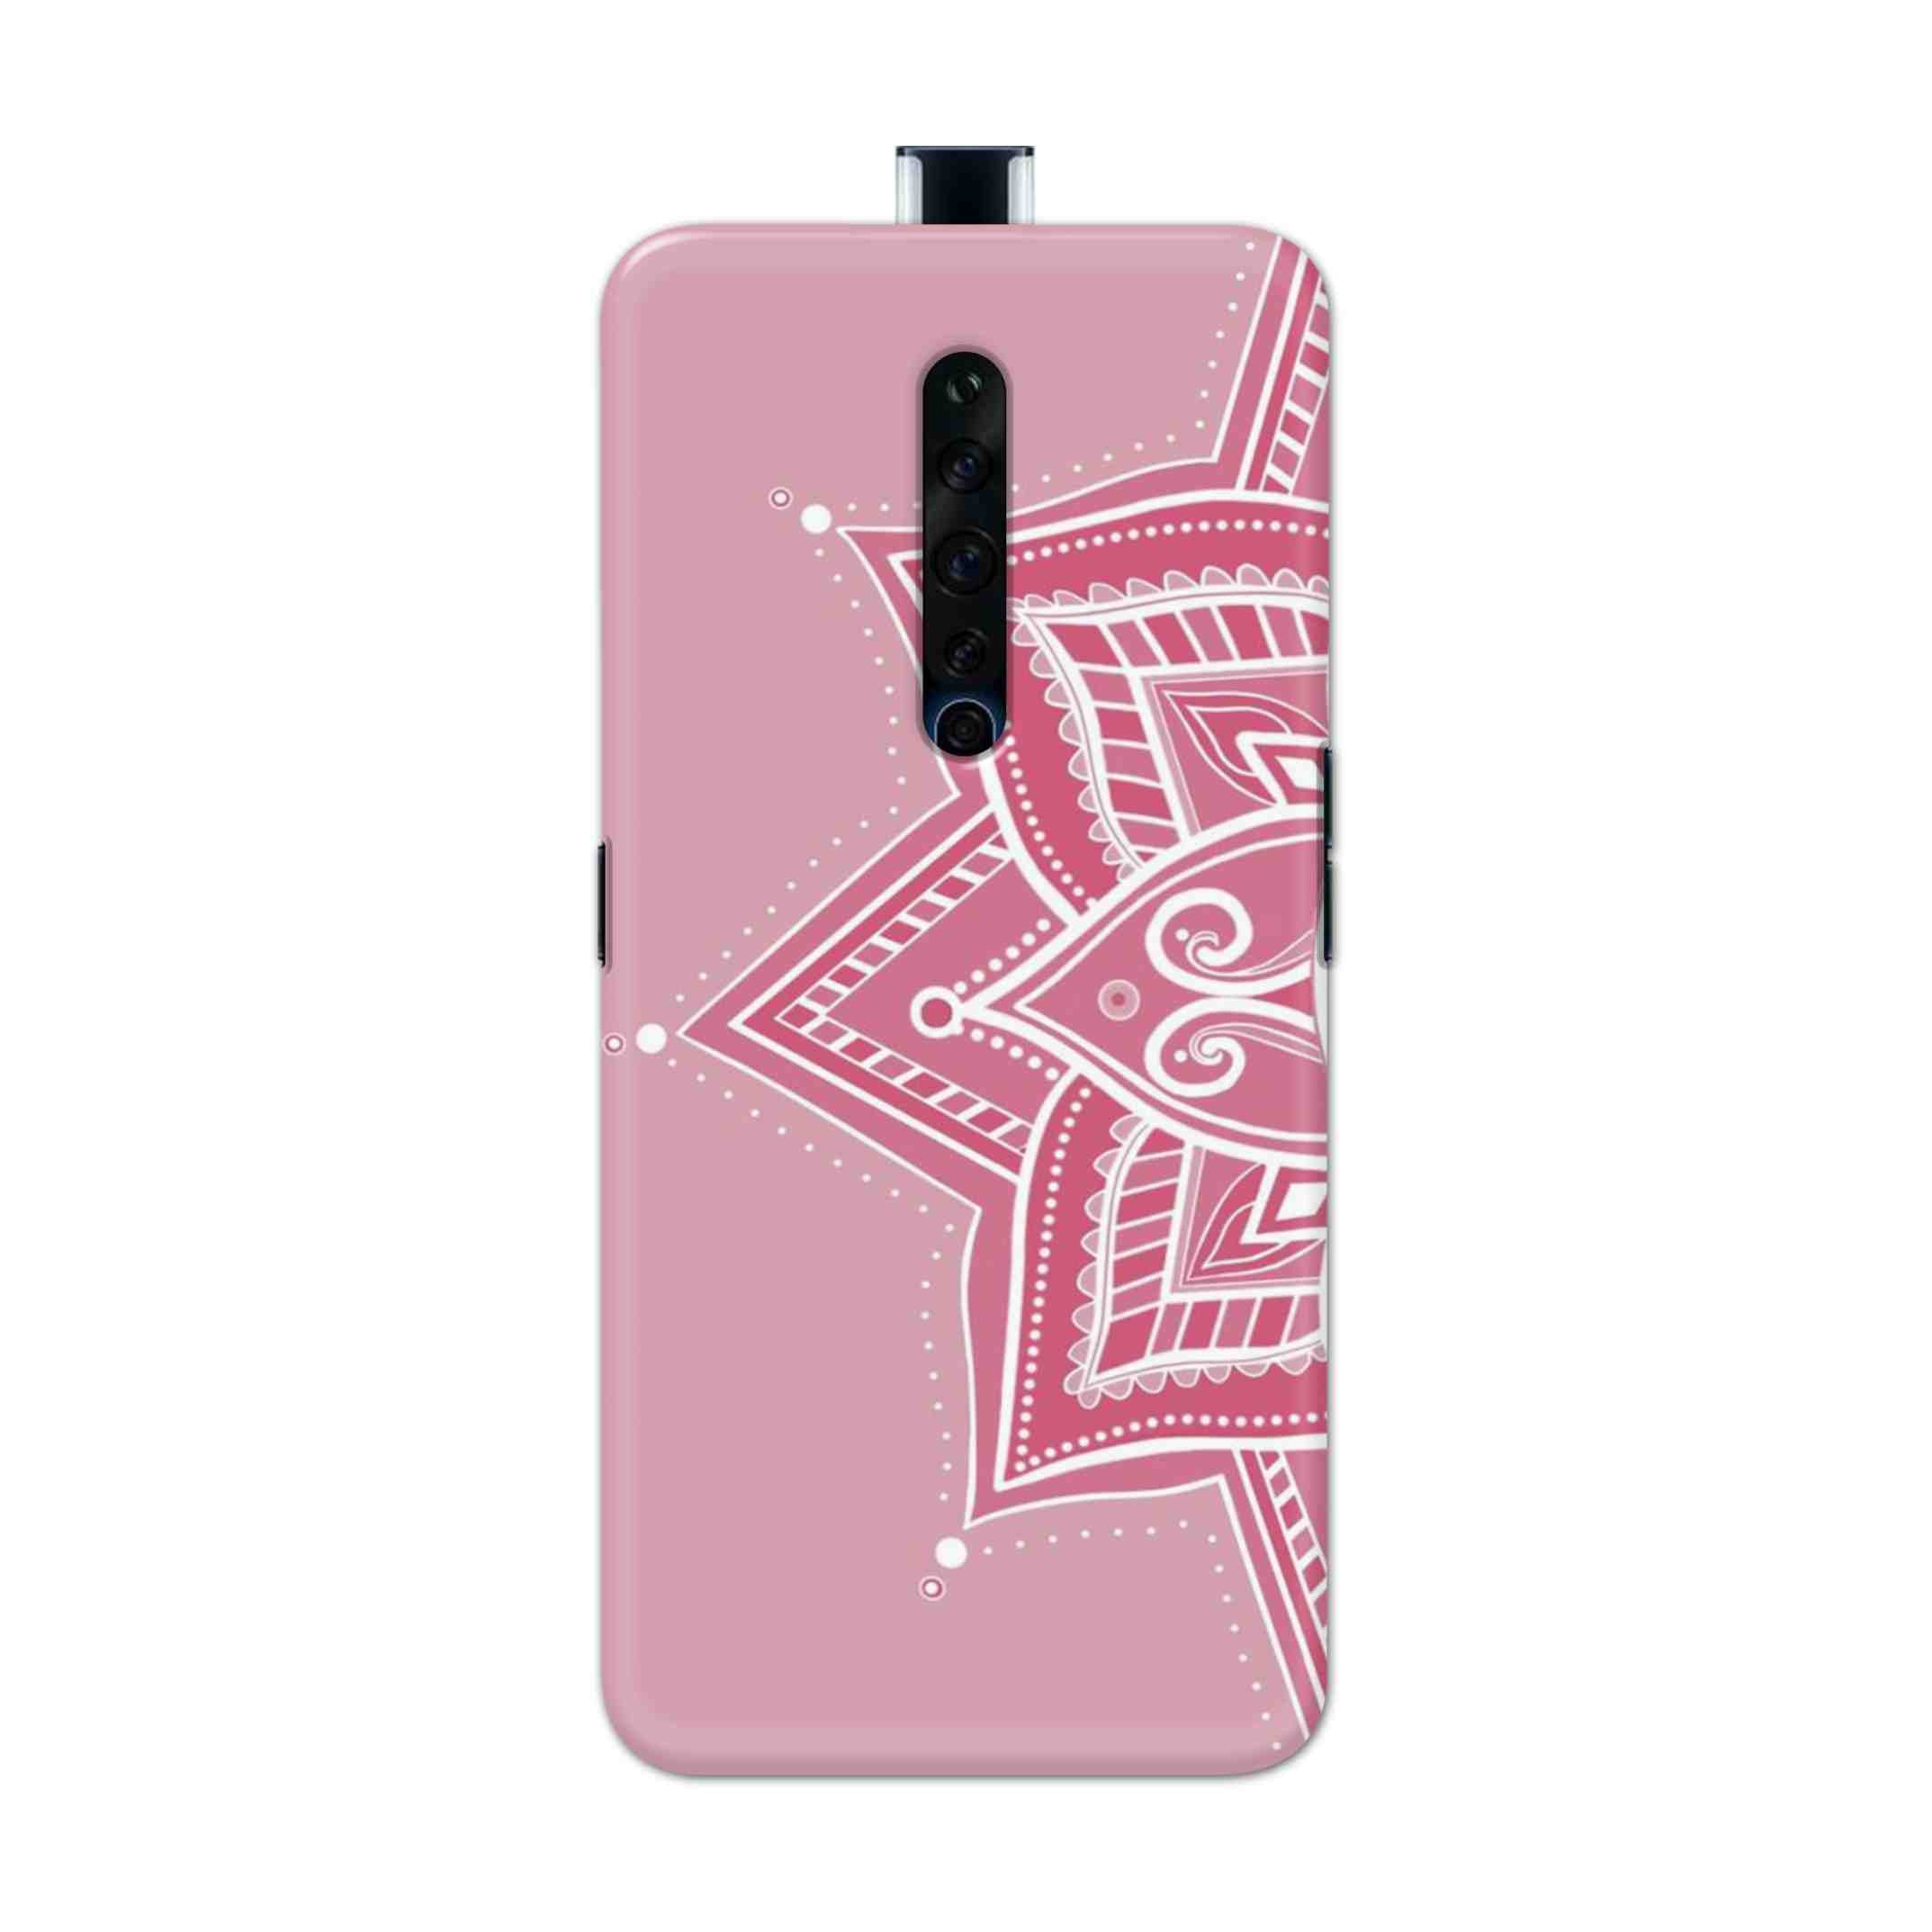 Buy Pink Rangoli Hard Back Mobile Phone Case Cover For Oppo Reno 2Z Online